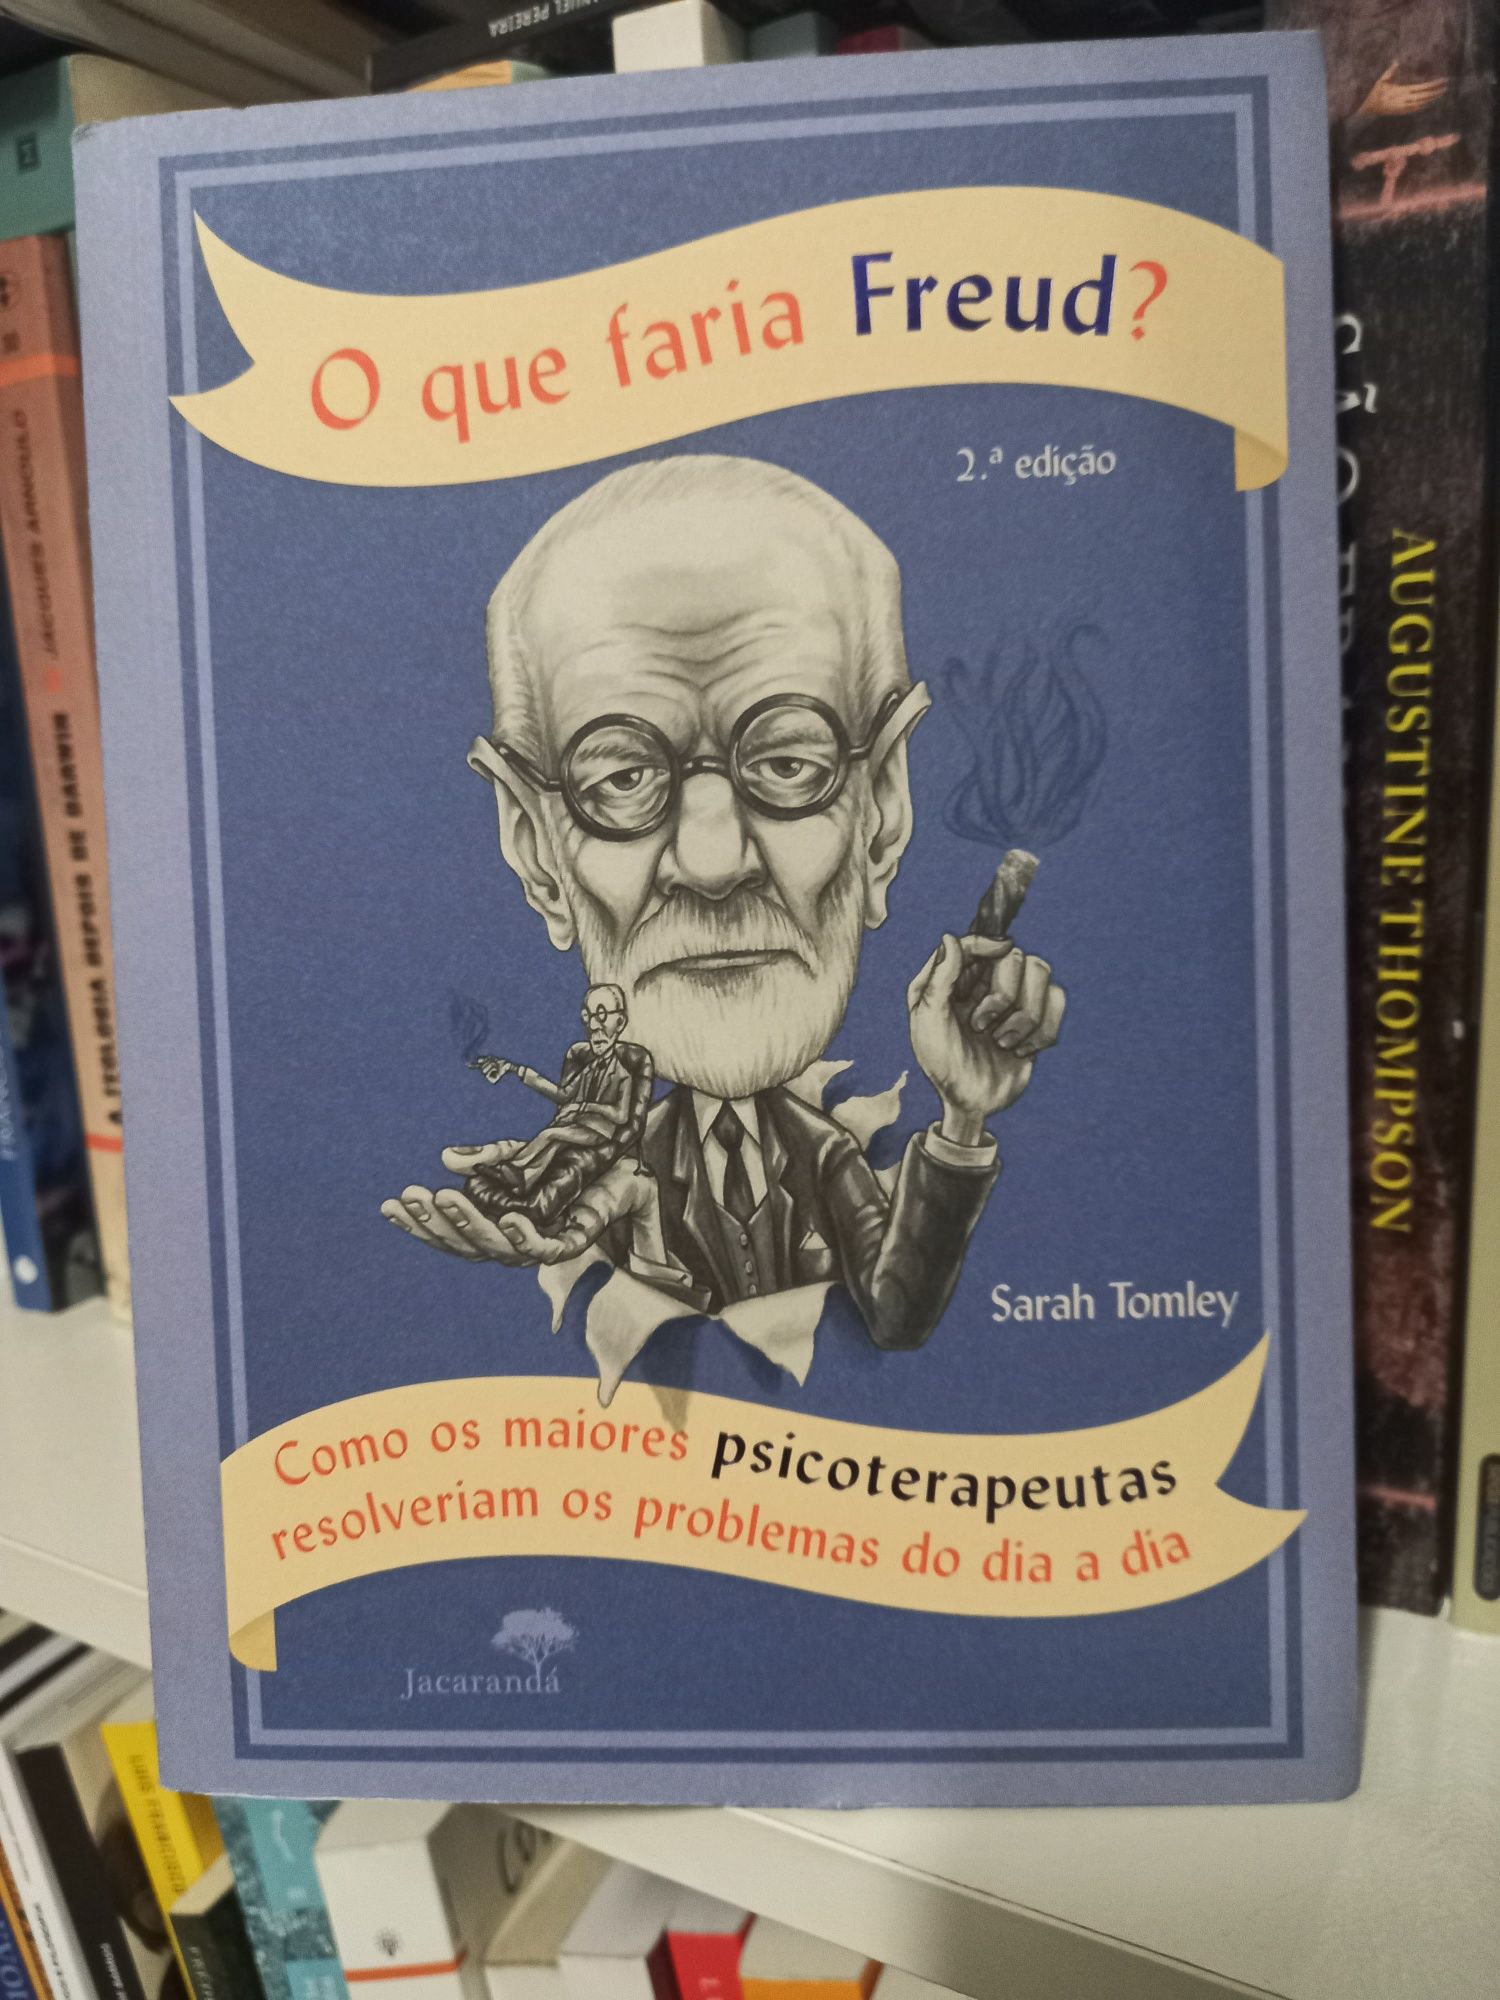 O que faria Freud?